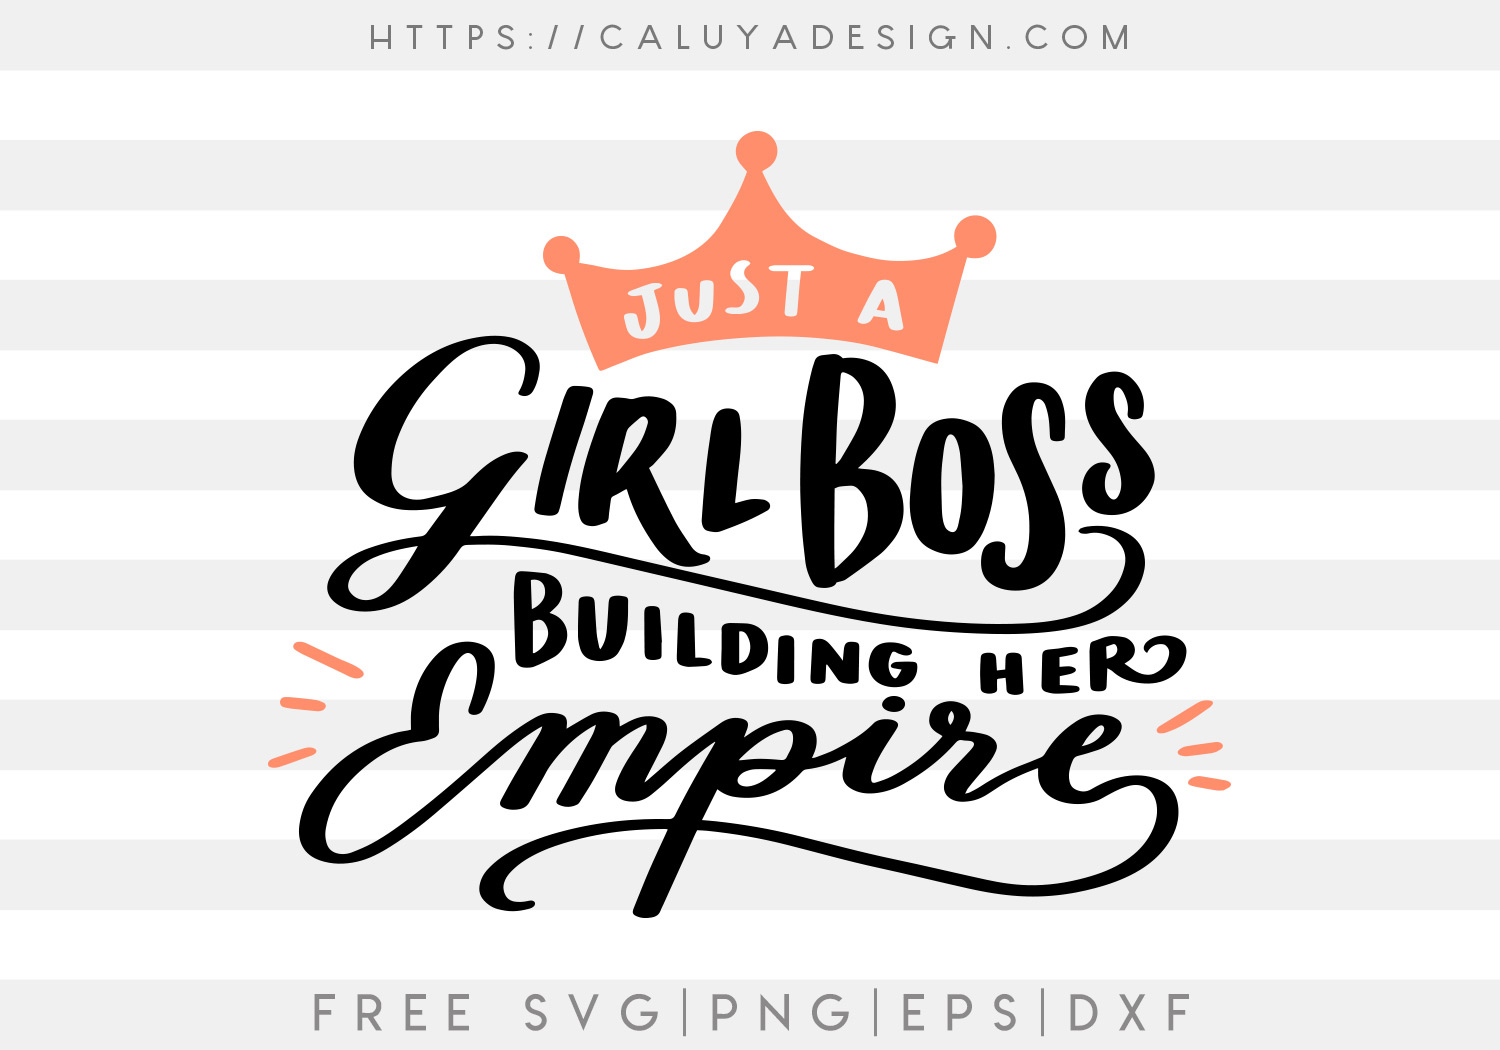 Free Just a Girlboss SVG Cut File